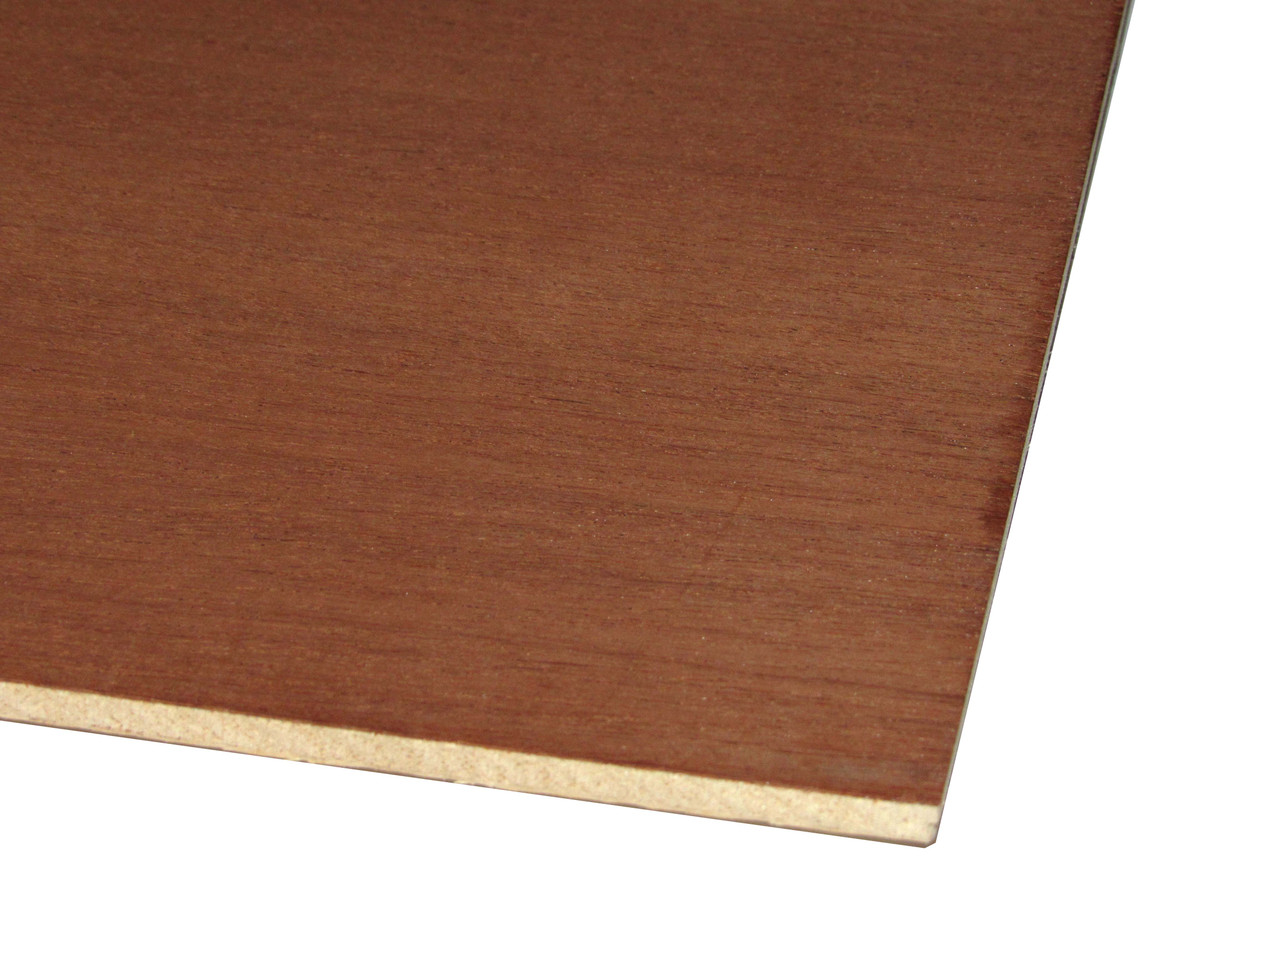 Oak, White Plywood Full Sheets 48X96 (4' x 8')